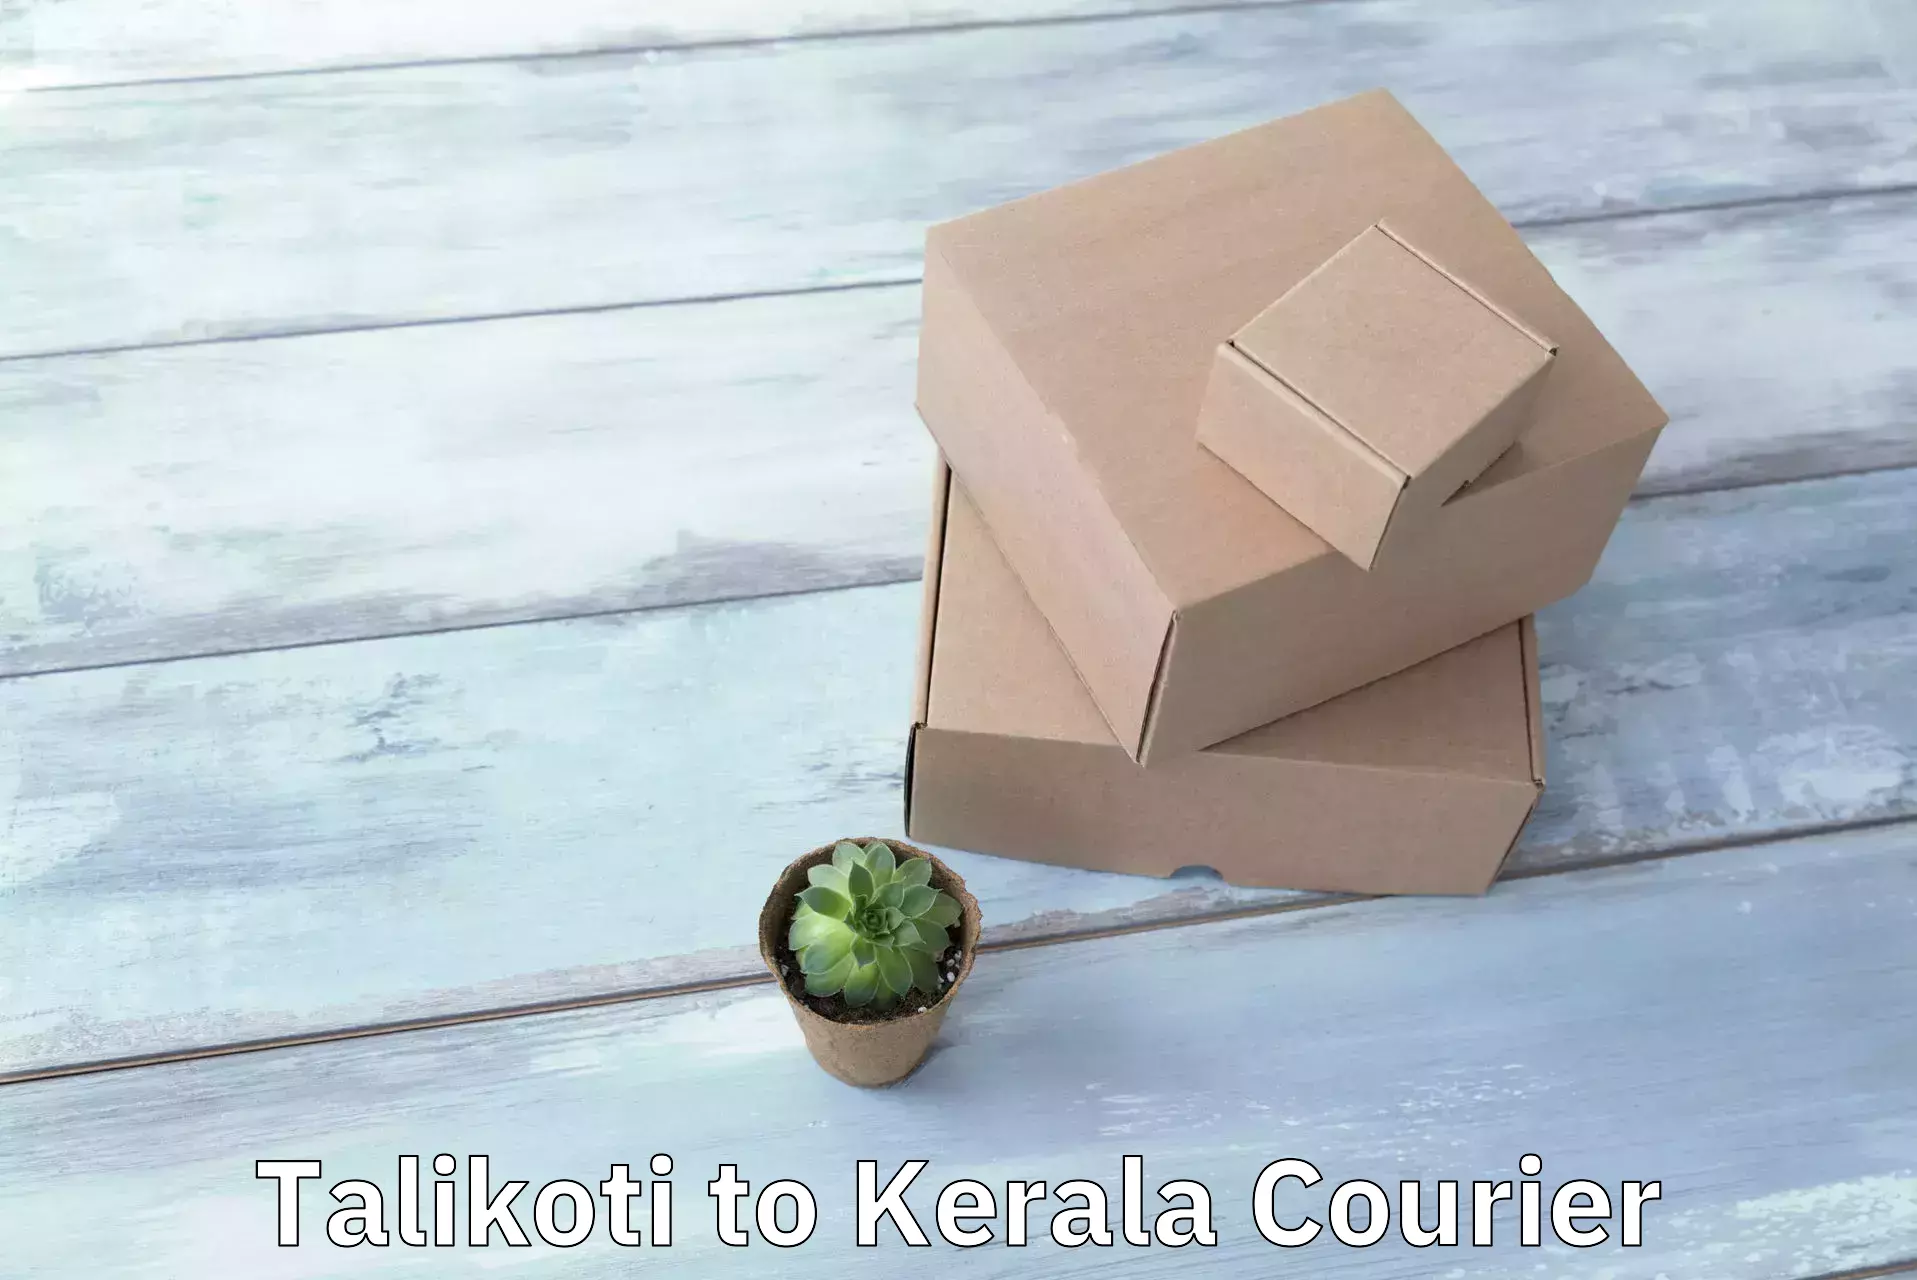 Modern delivery methods Talikoti to Cochin Port Kochi